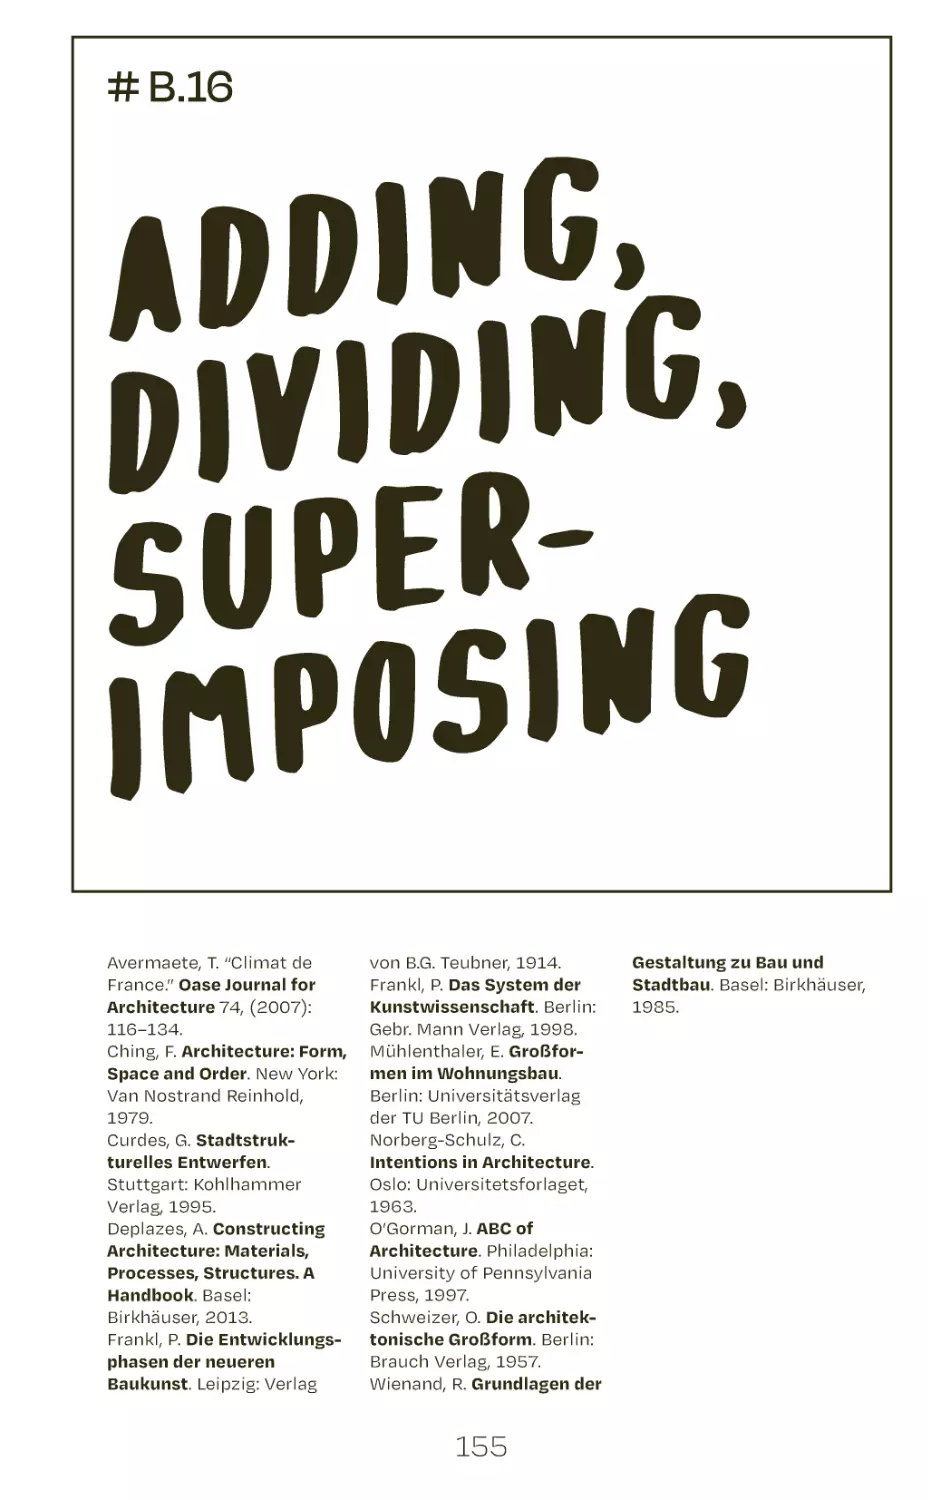 # B.16 adding, dividing, superimposing